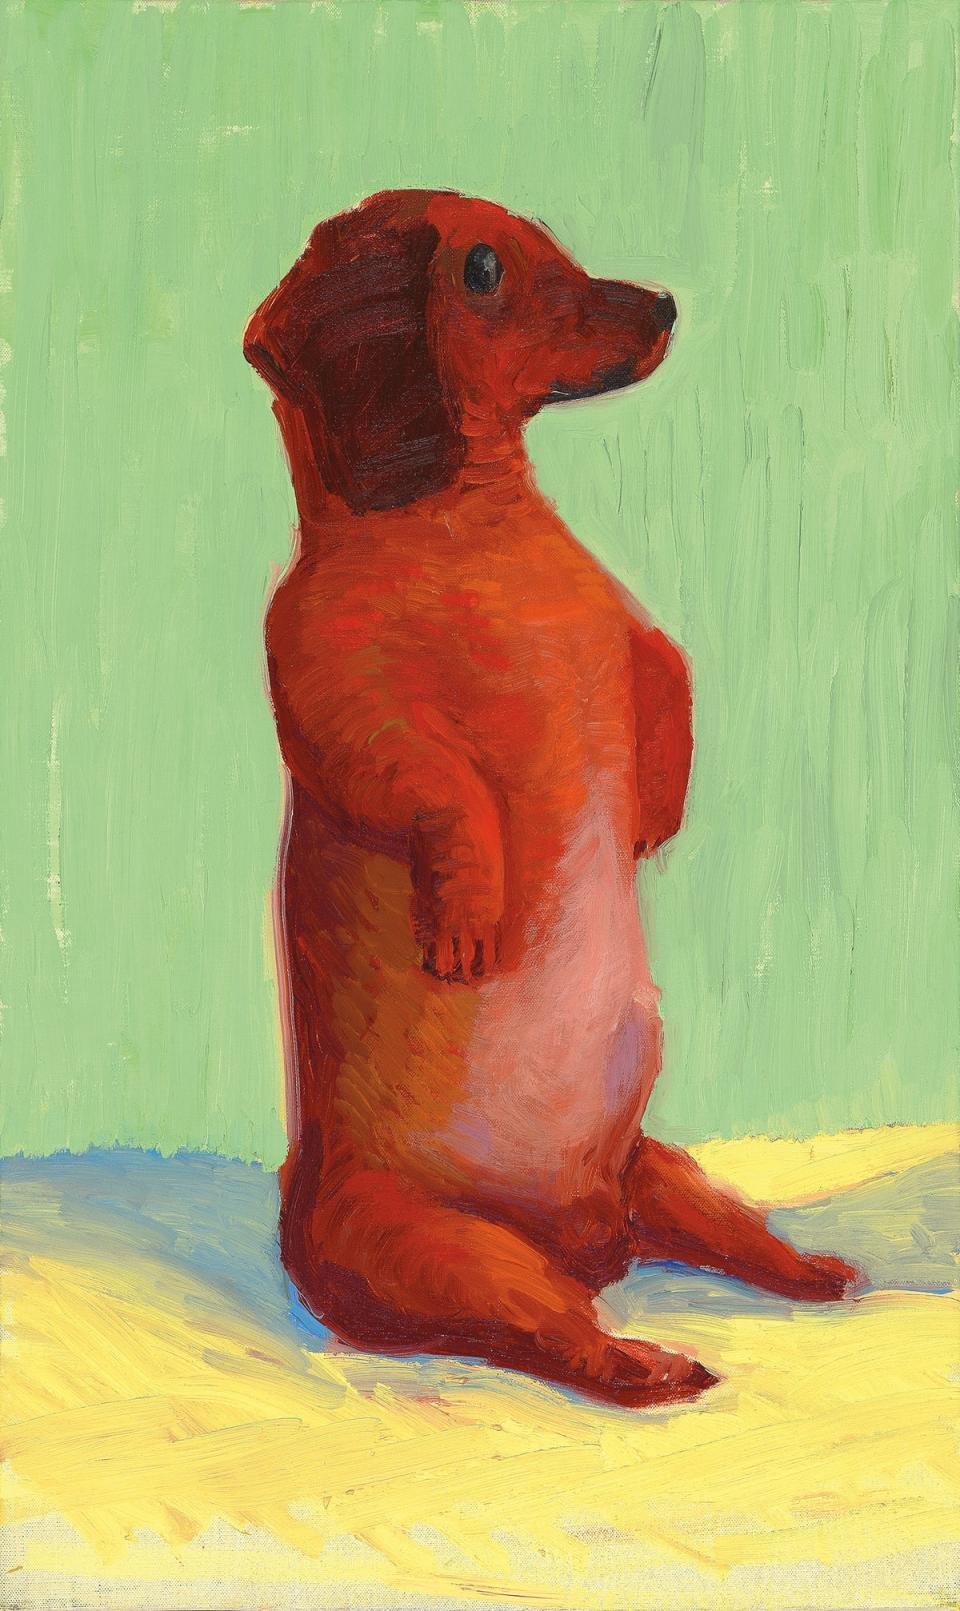 Dog Painting 41 by David Hockney, 1995 (Richard Schmidt)